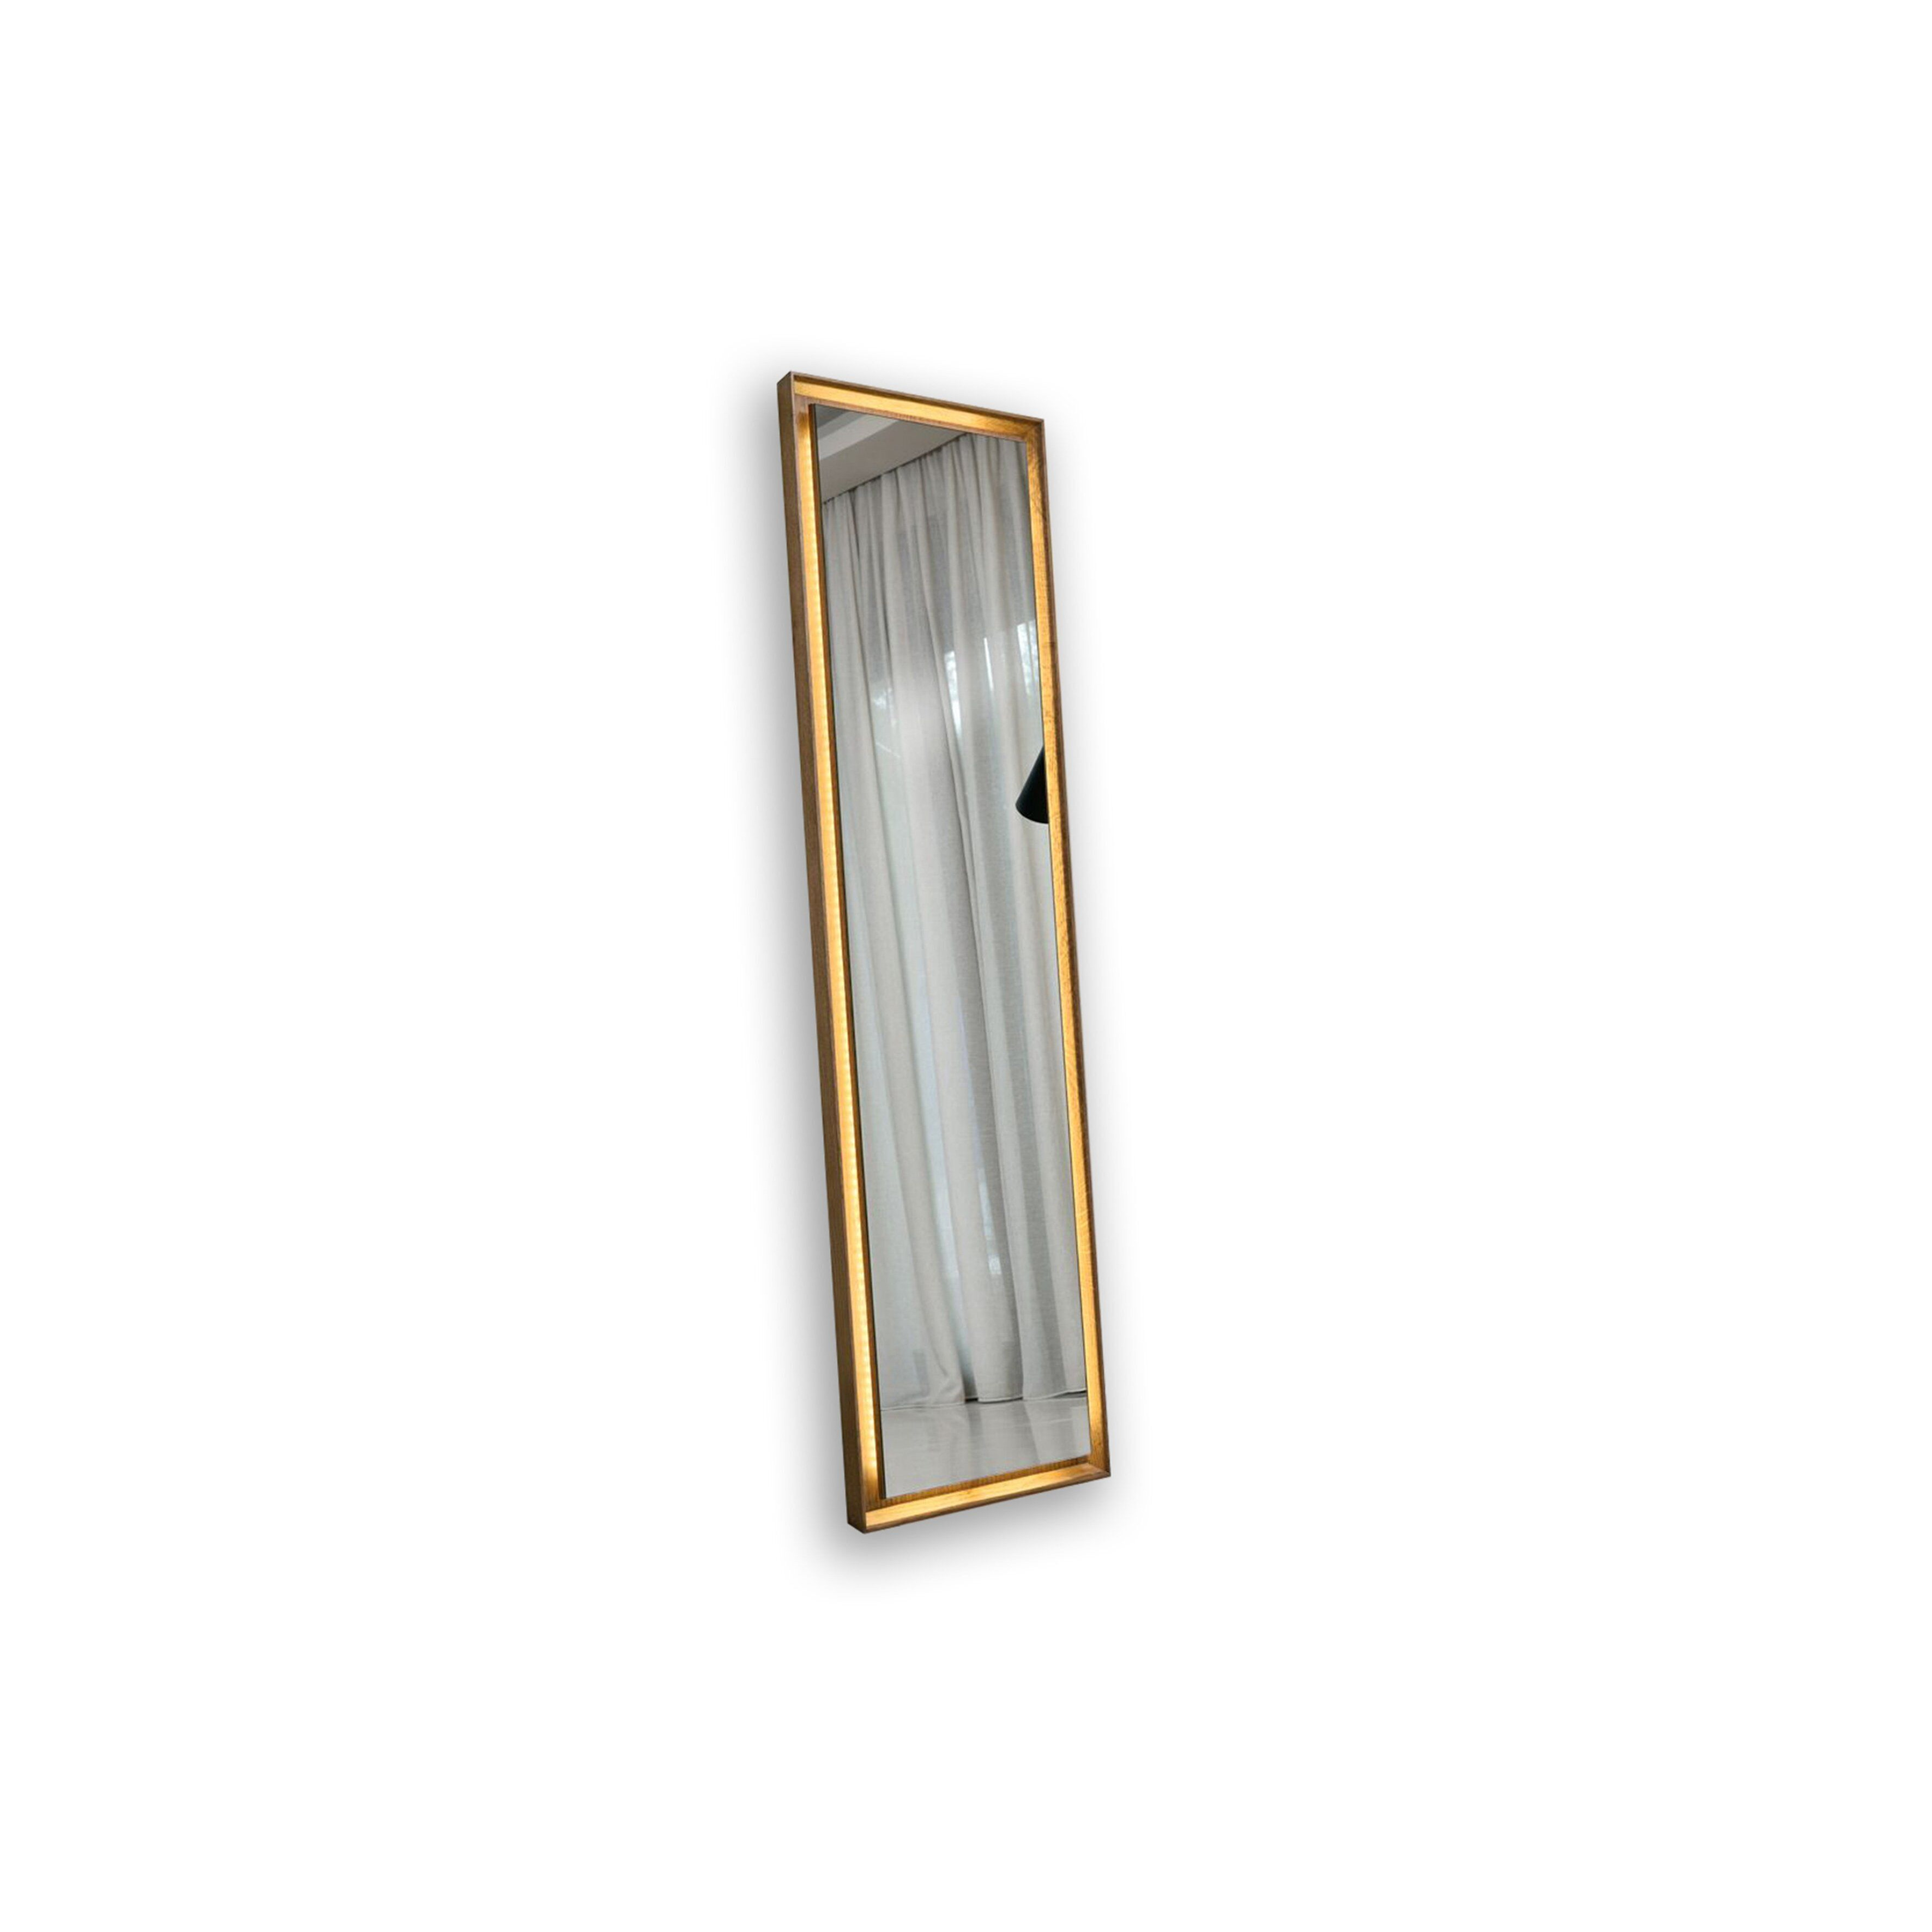 "Moli Floor Standing LED Mirror, Natural Oak "